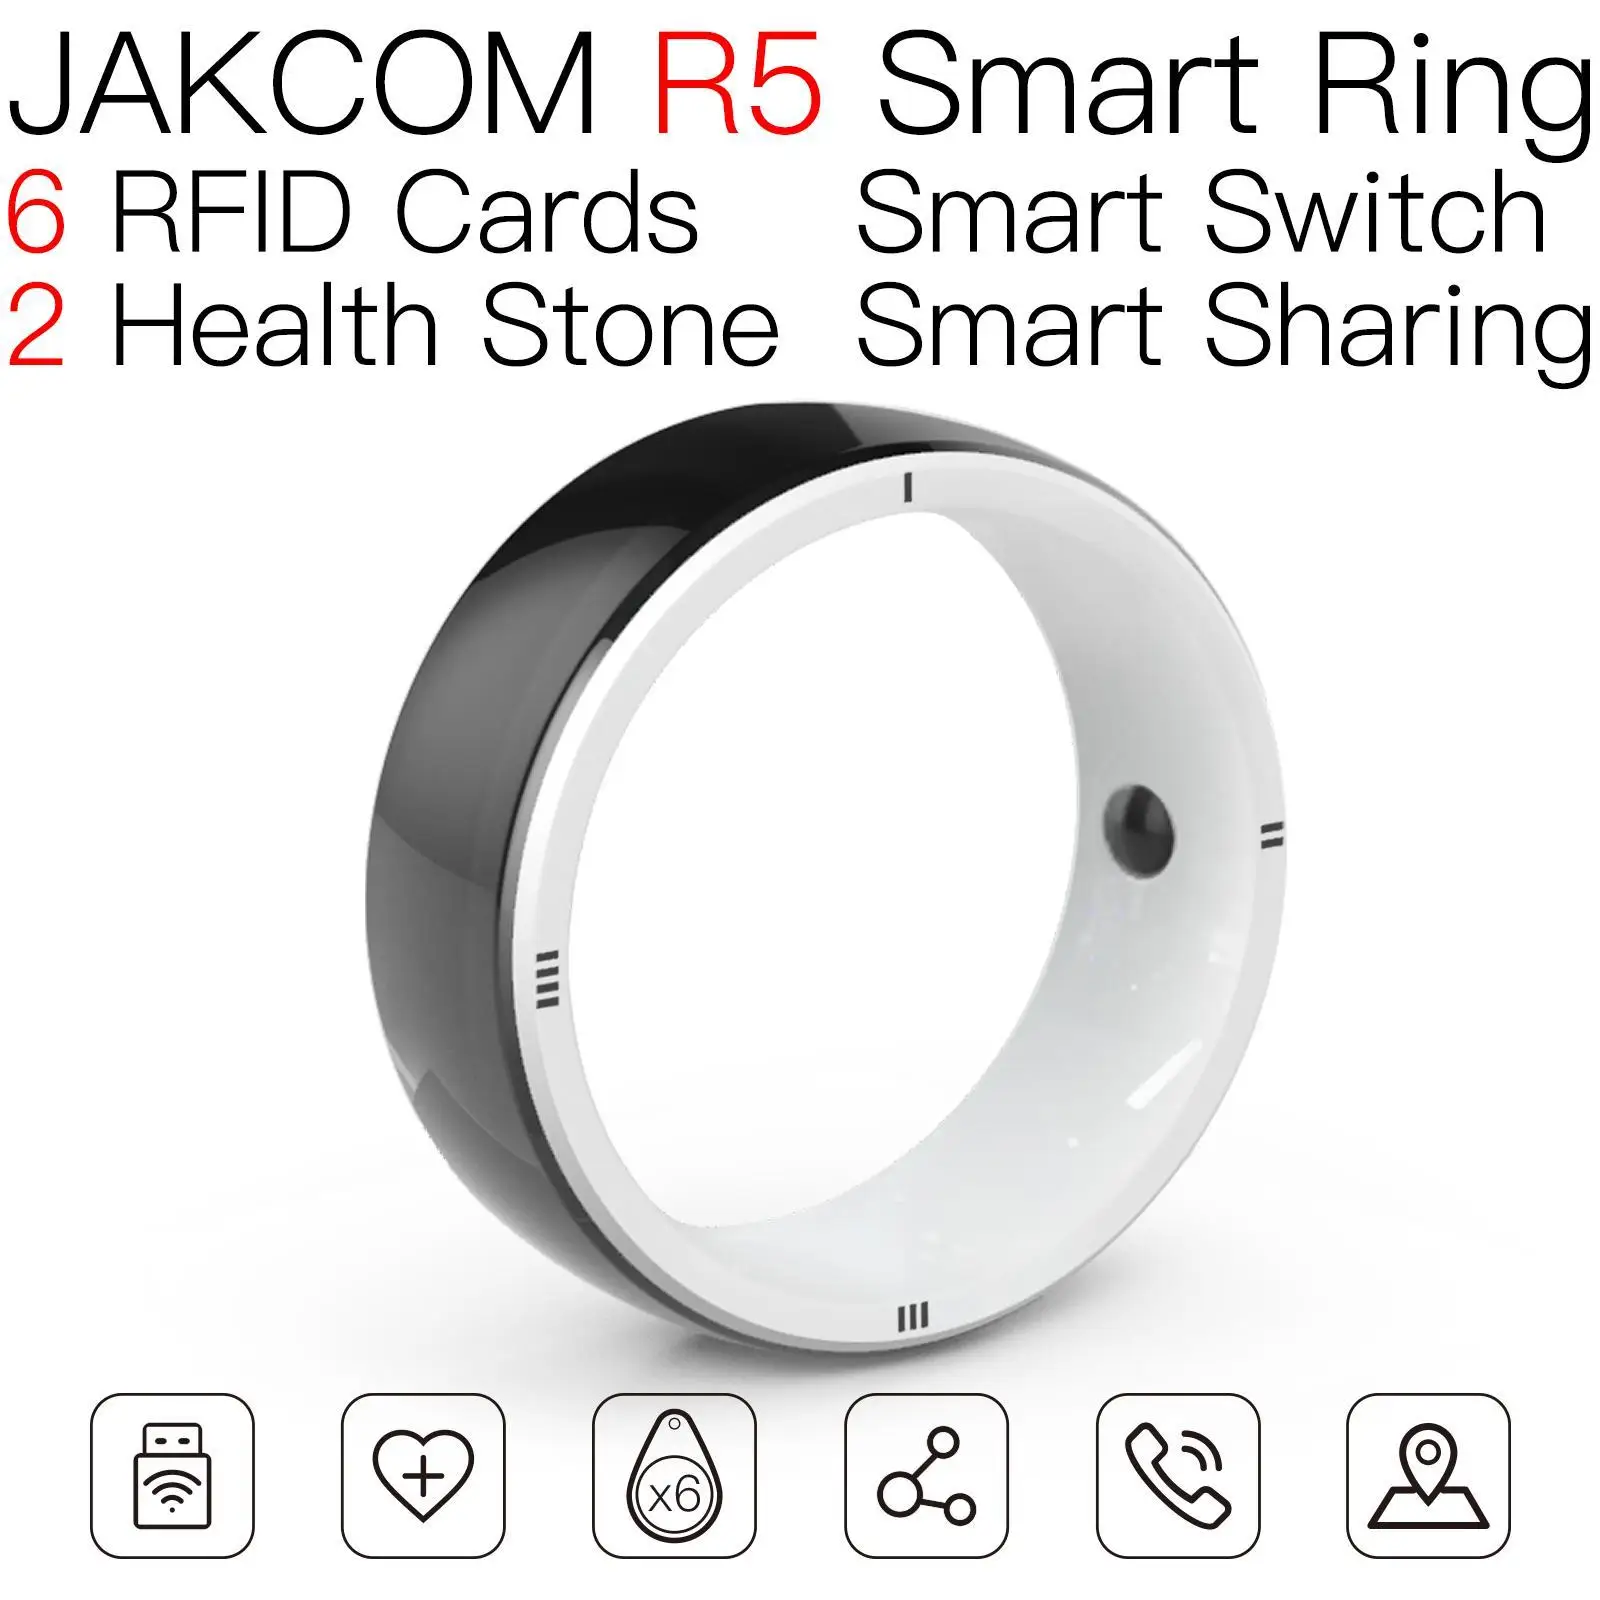 

JAKCOM R5 Smart Ring better than chair nb iot nano rfid nfc uid changeable sticker uhf reader writer chafon tag 125khz